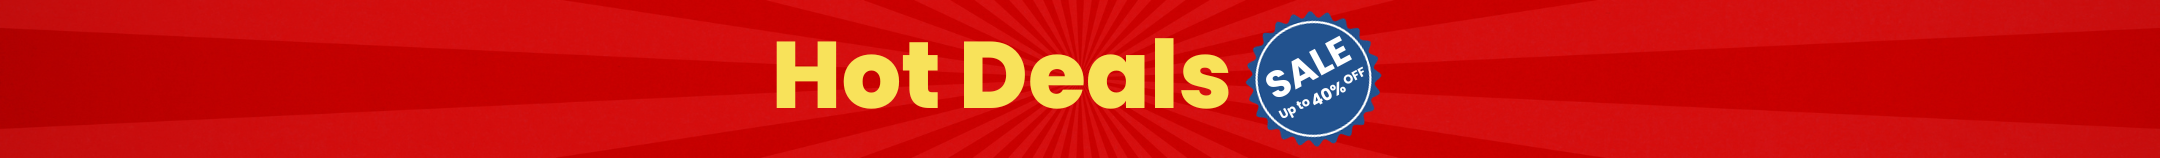 hot-deals-website-banner-3.png